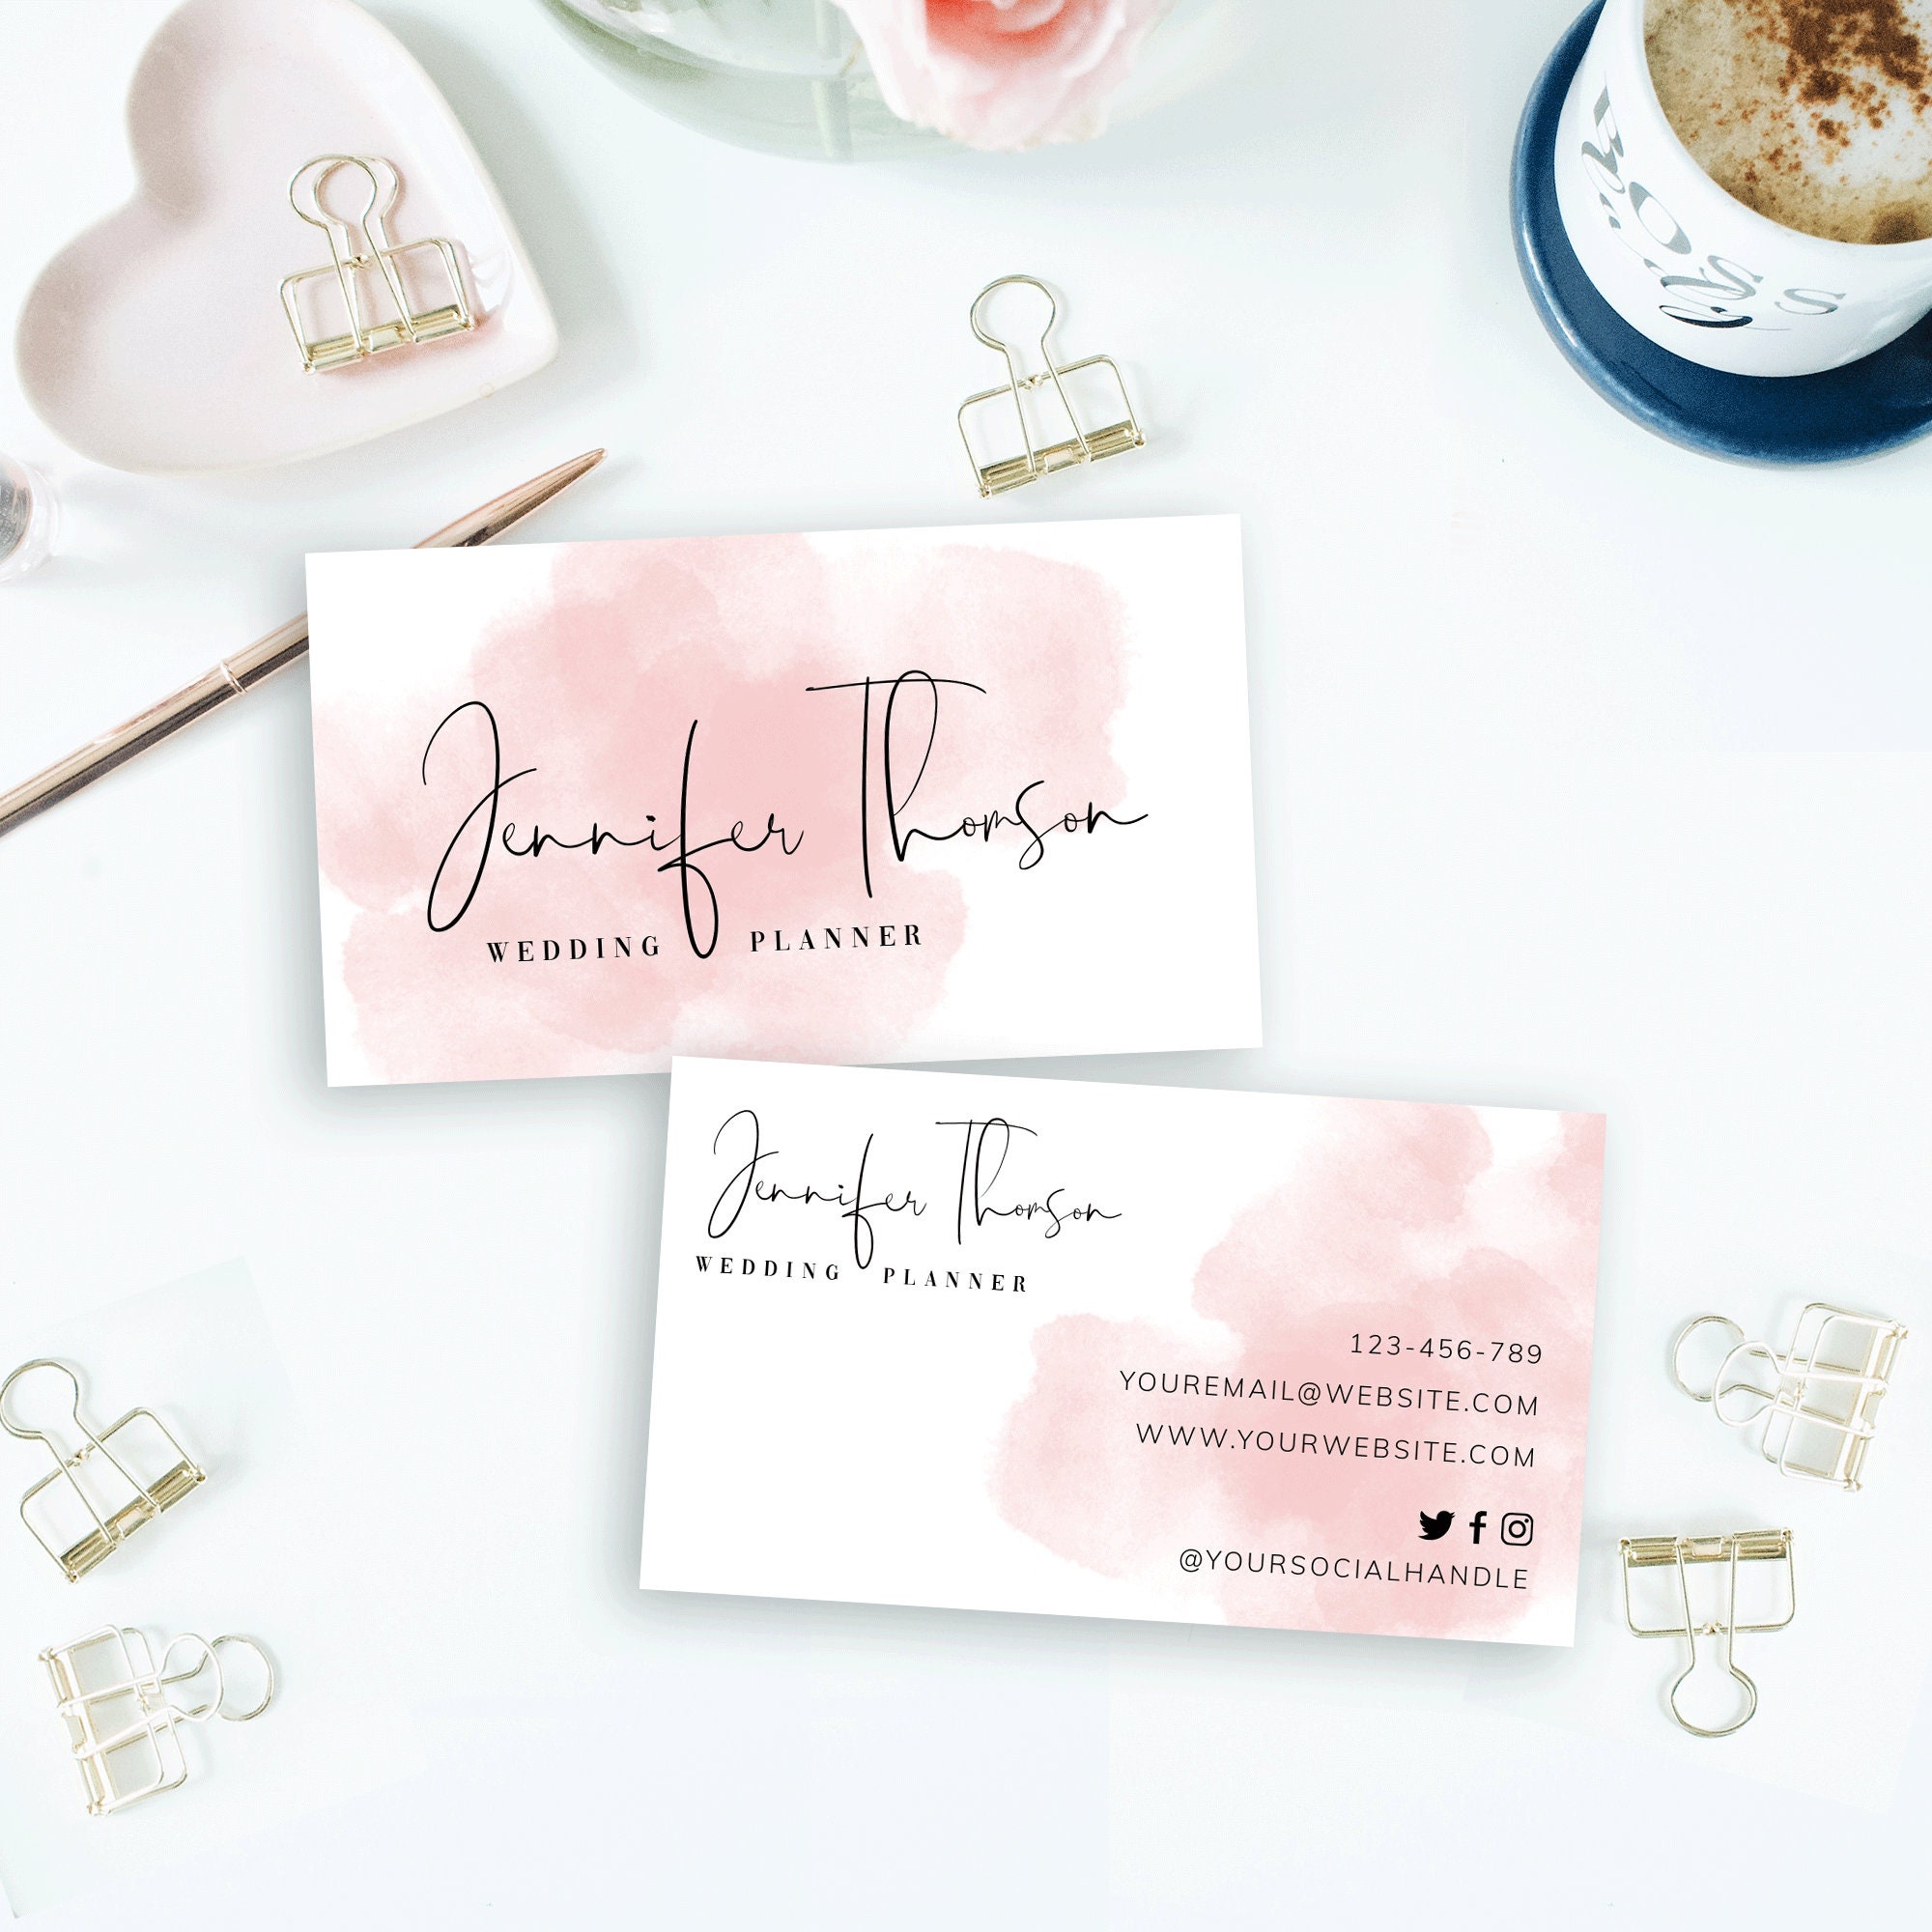 Business Card Template, Editable Pink Business Cards, Printable DIY  Business Cards, Monat Business Cards, Feminine Business Card. DTP-025 